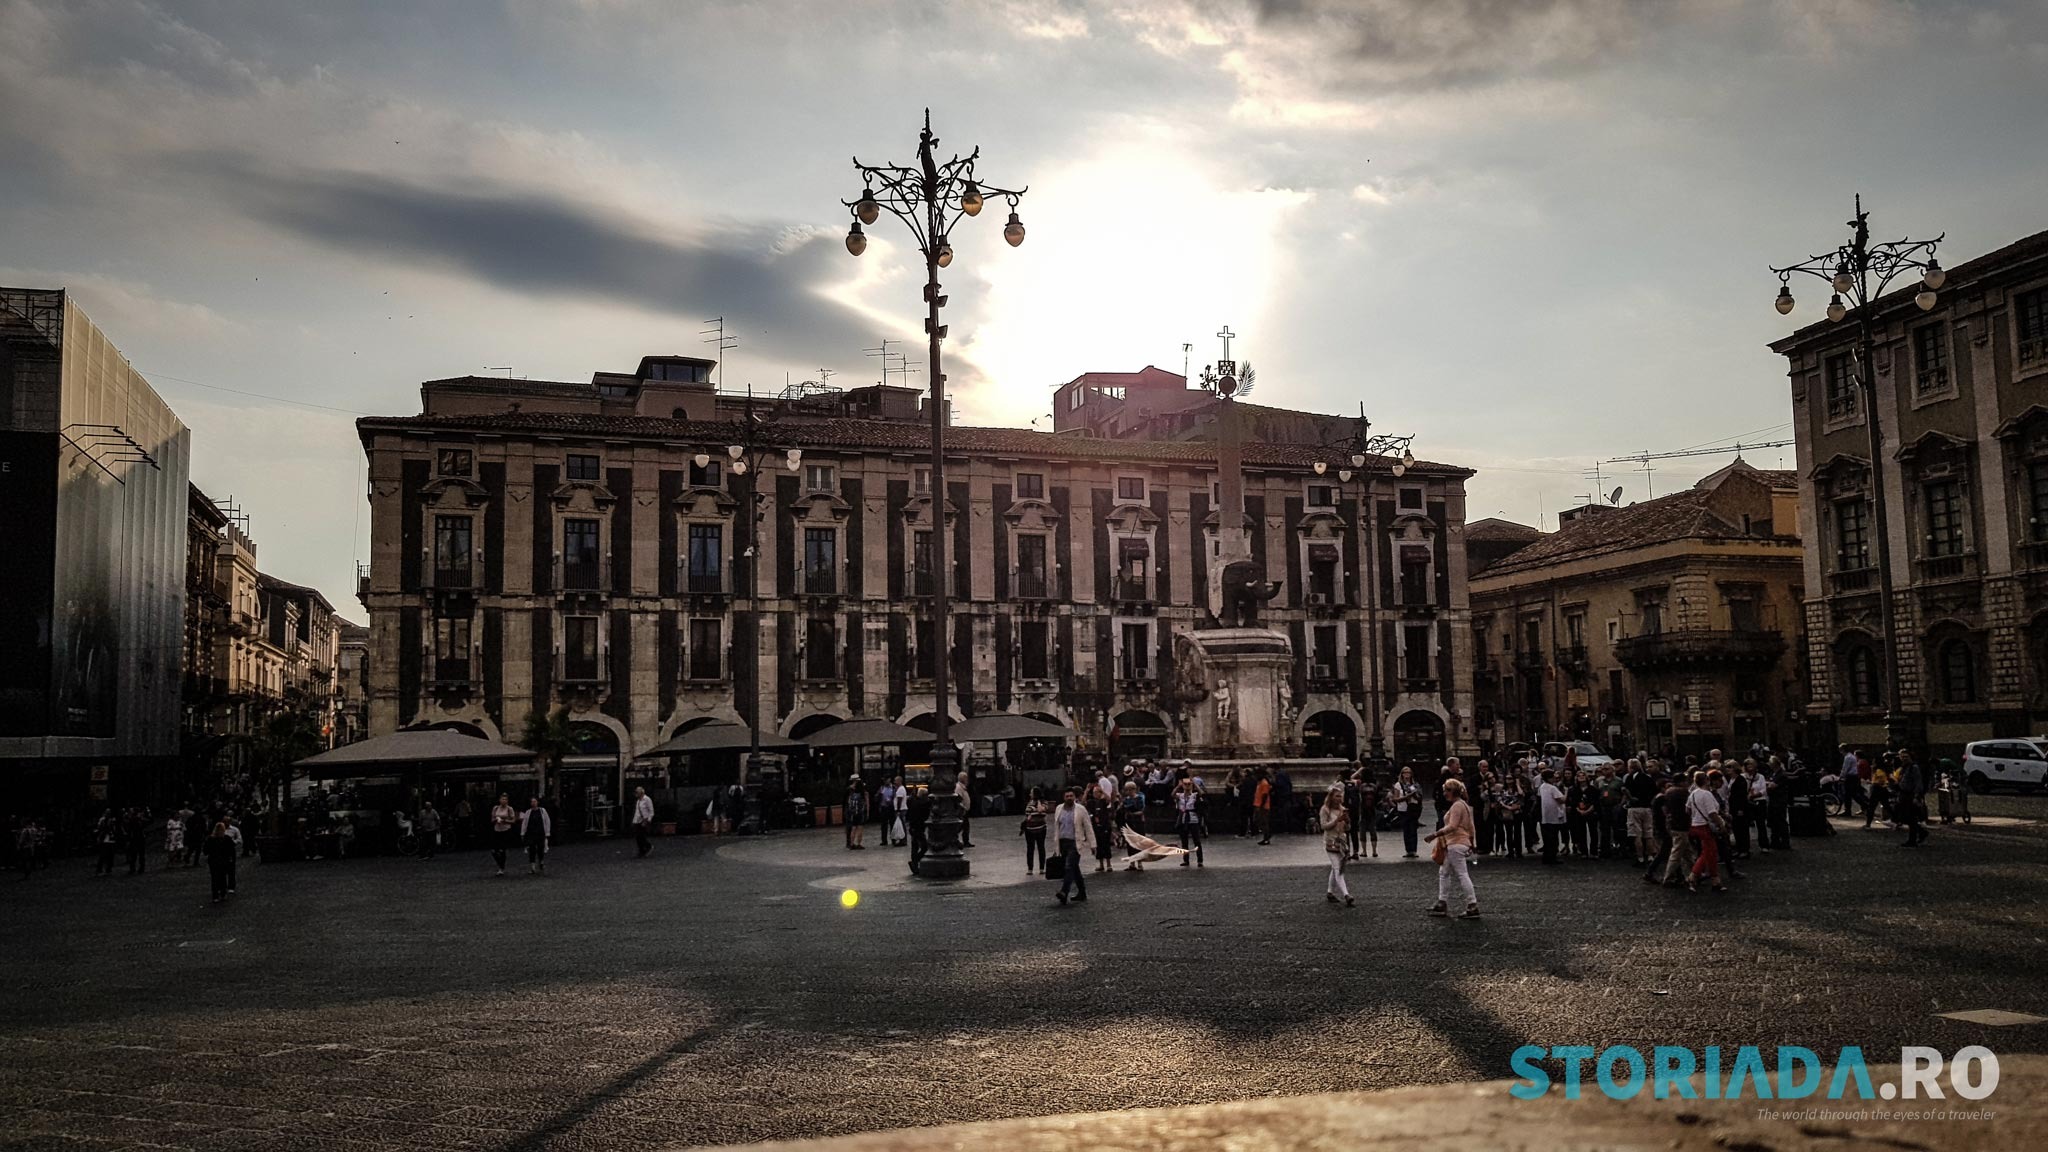 Piazza Duomo, Catania